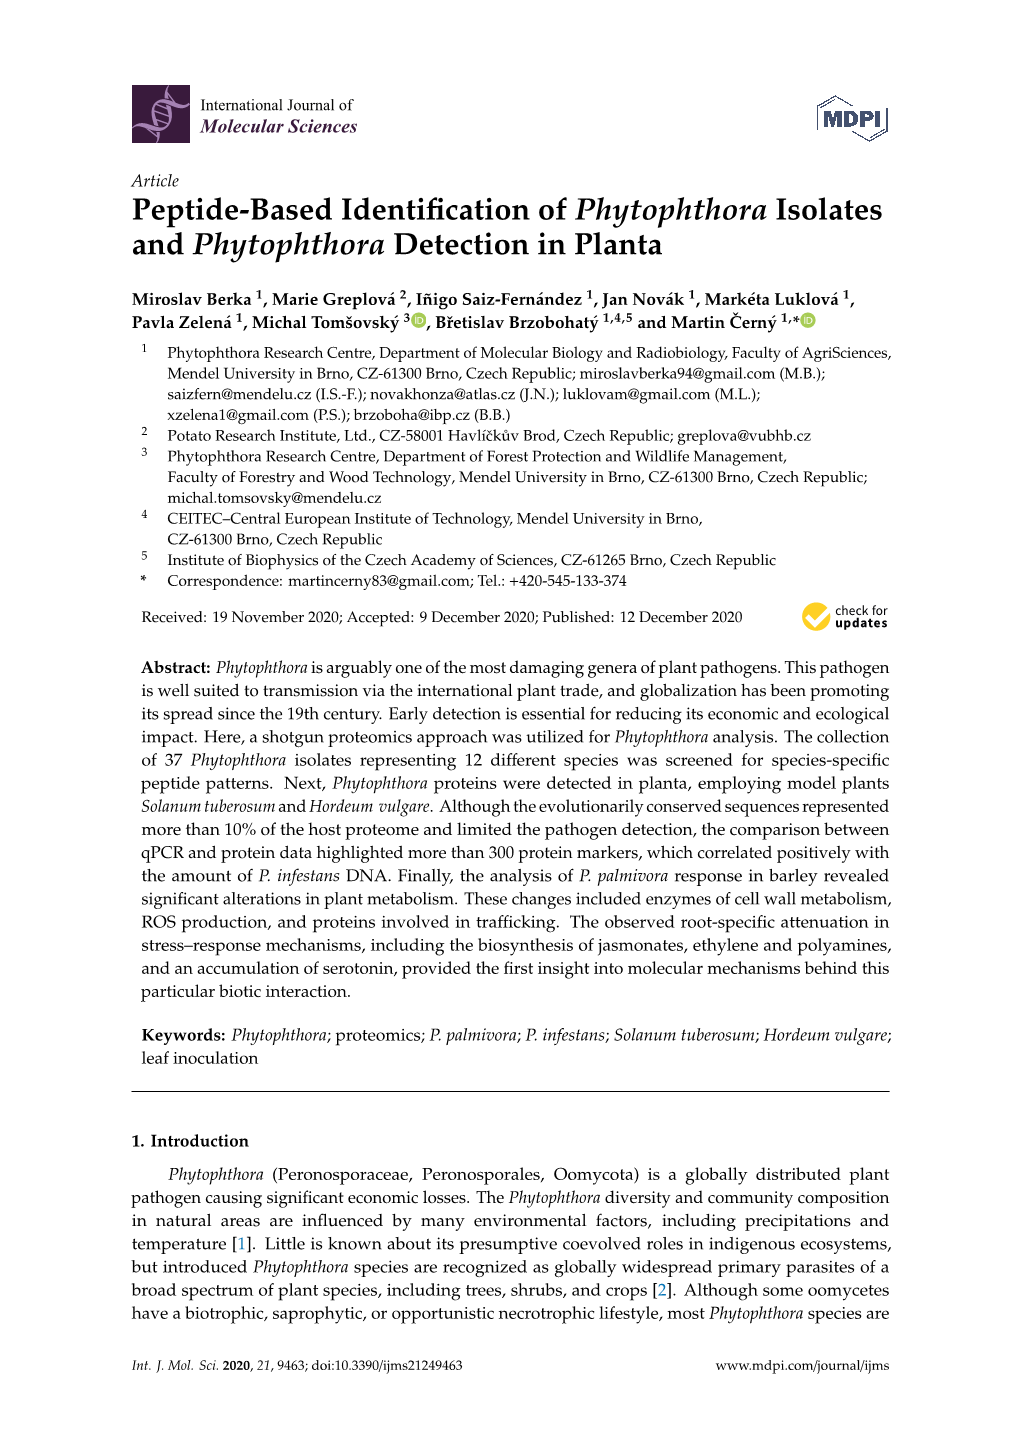 Peptide-Based Identification of Phytophthora Isolates And